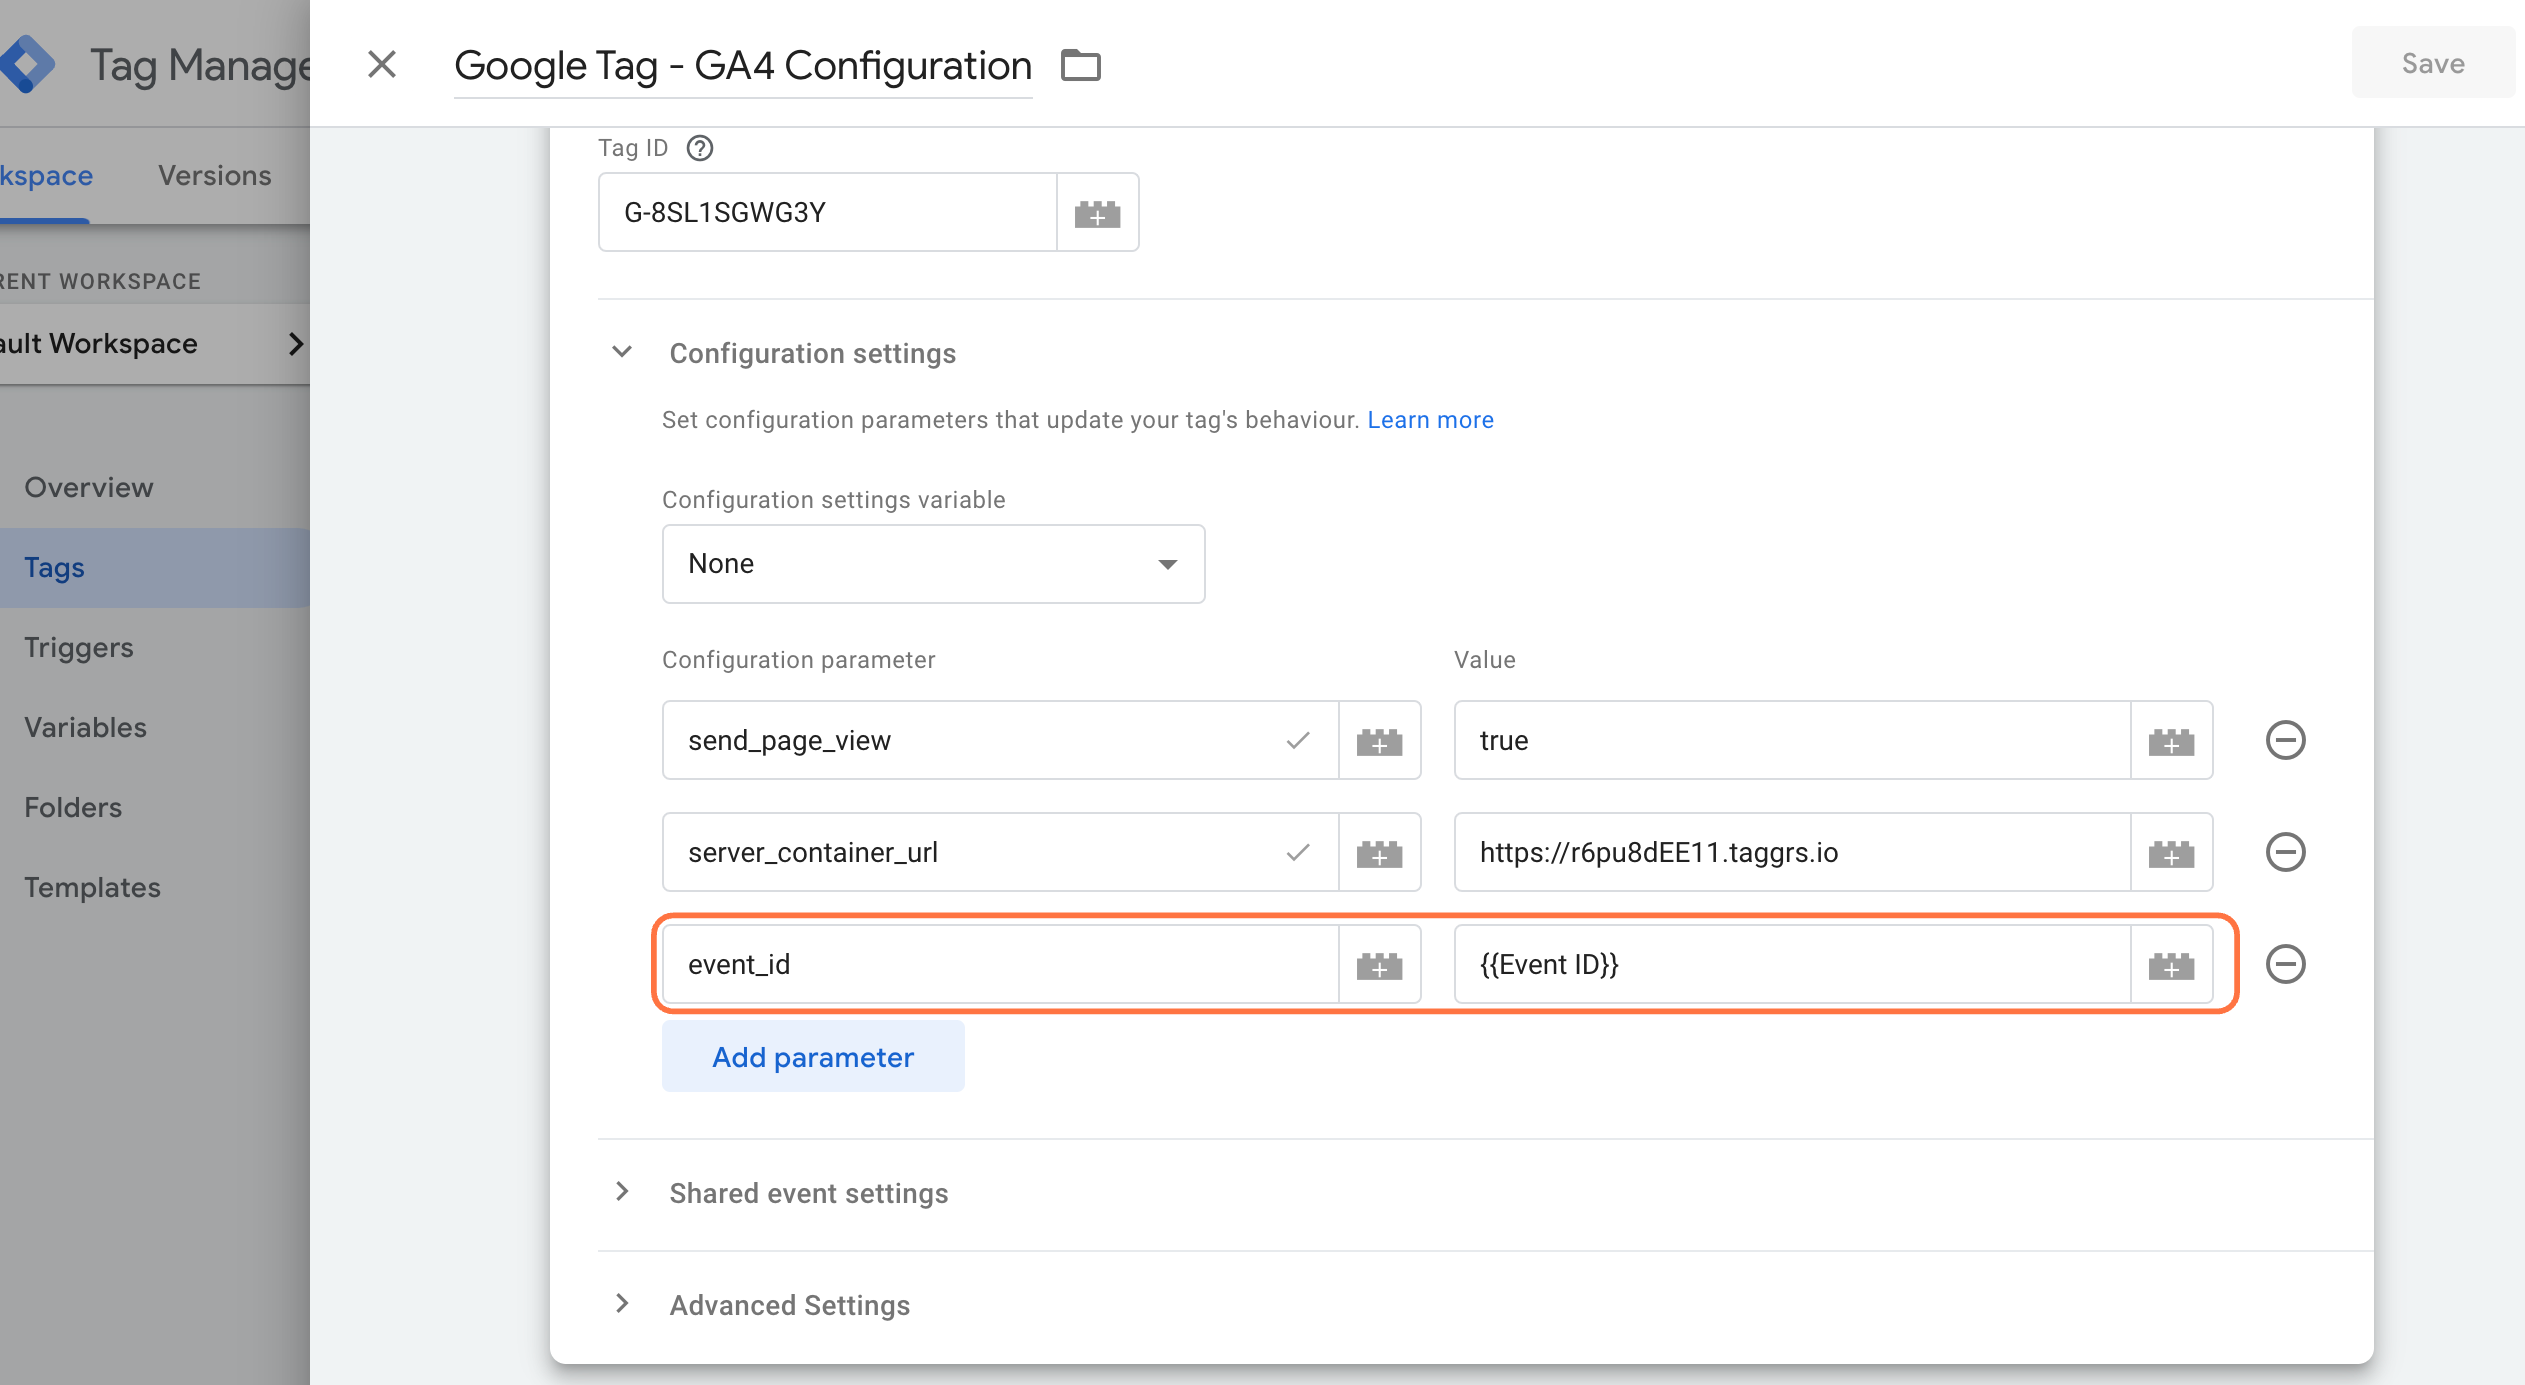 google-tag-ga4-configuration-event-deduplication